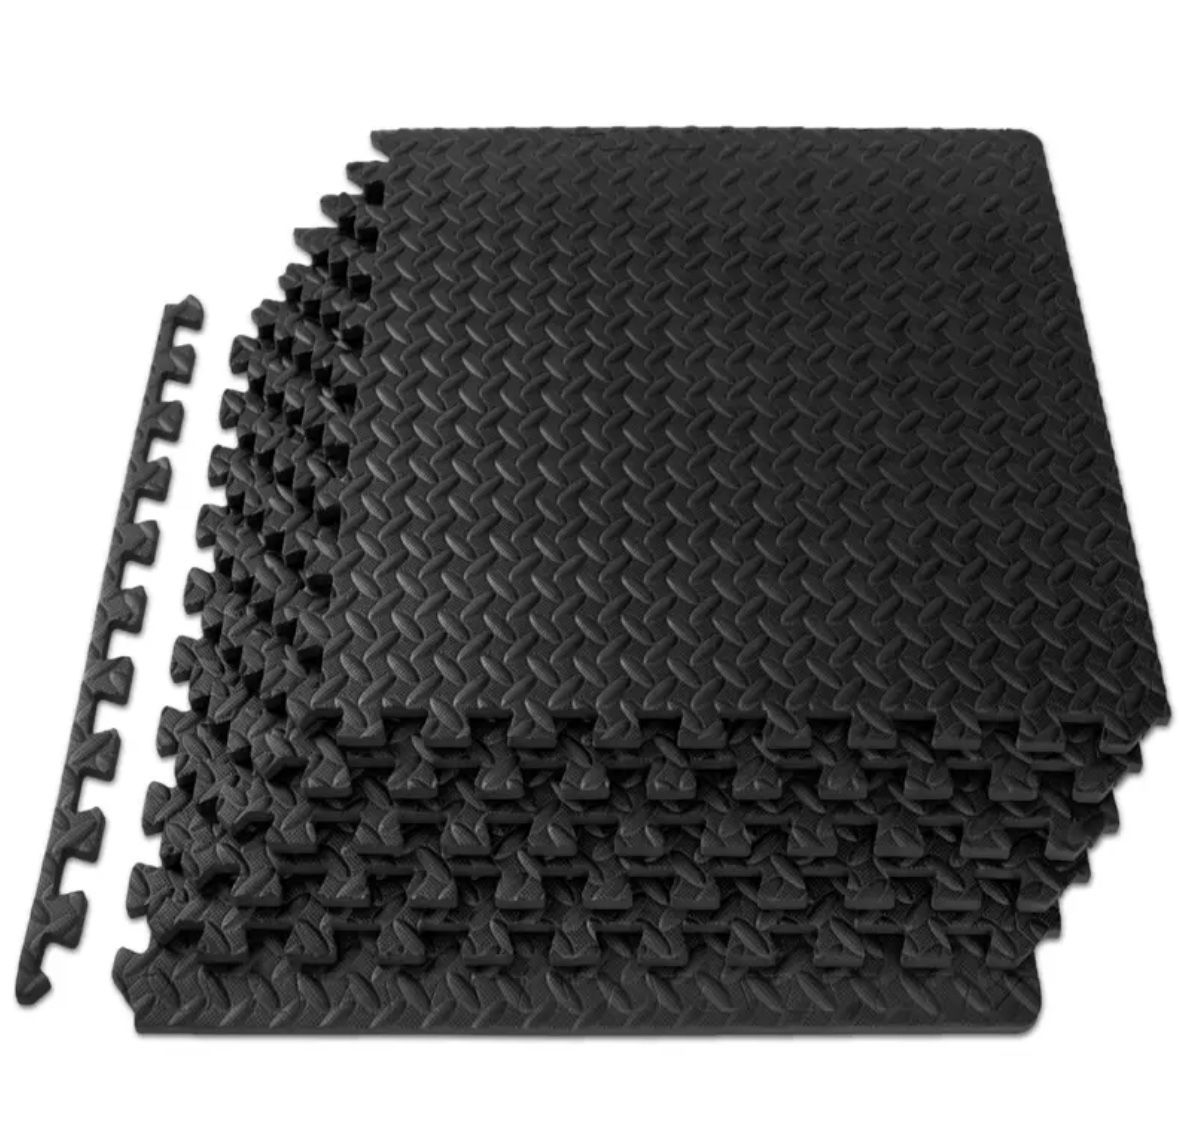 10pcs EVA Interlocking Foam Floor Tiles For Home & Gym, Workout Equipment, Floor Padding Mat